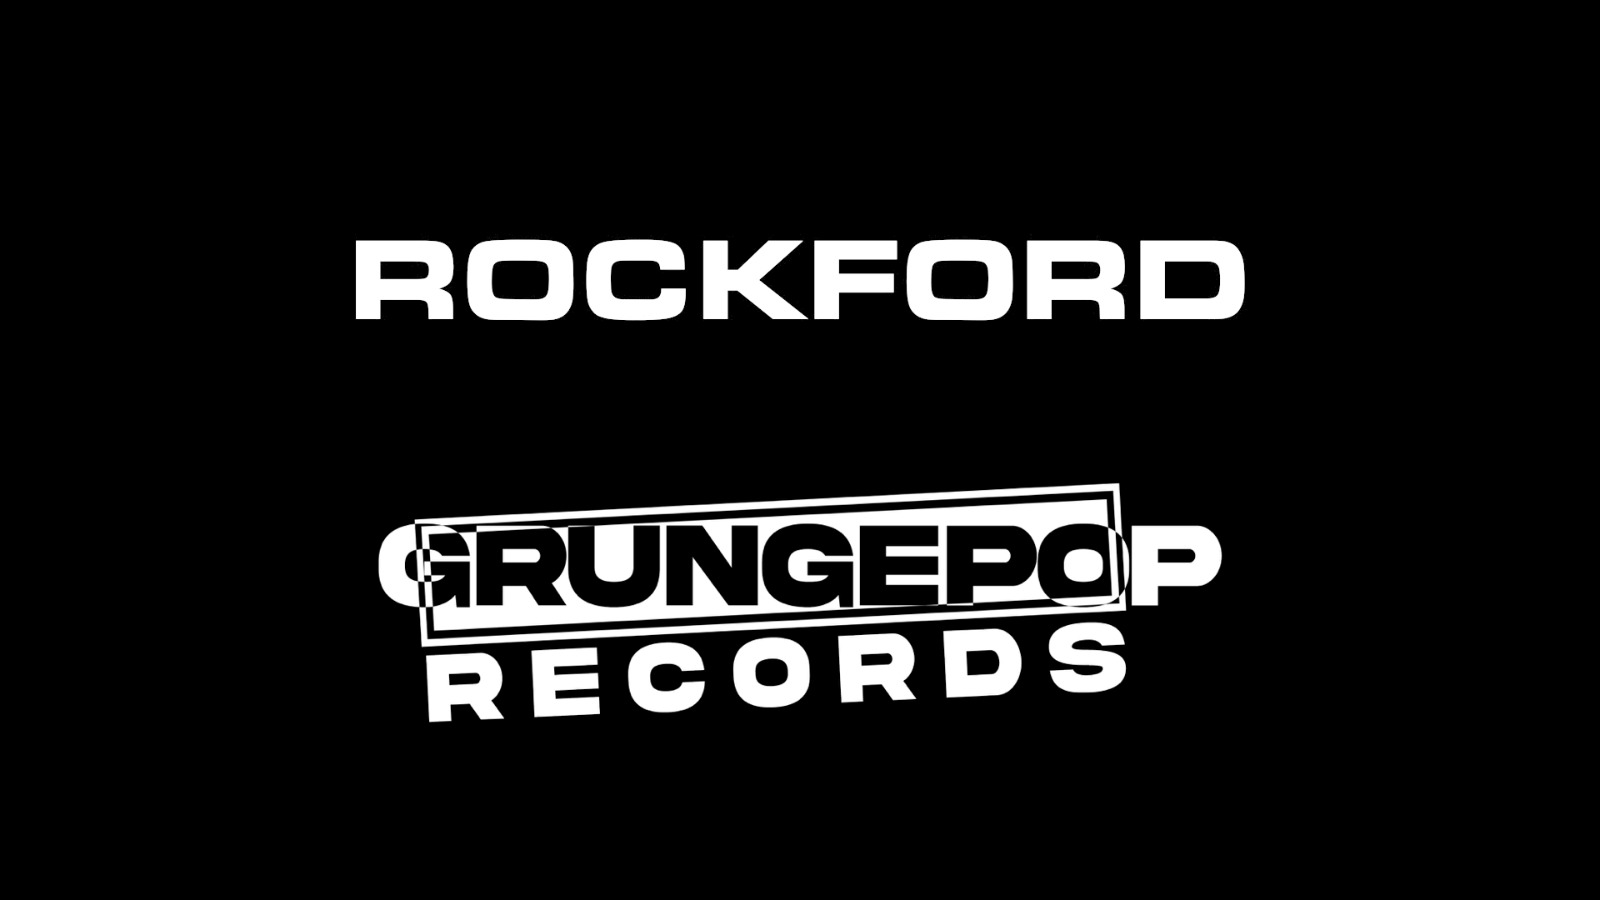 Grunge Pop Records